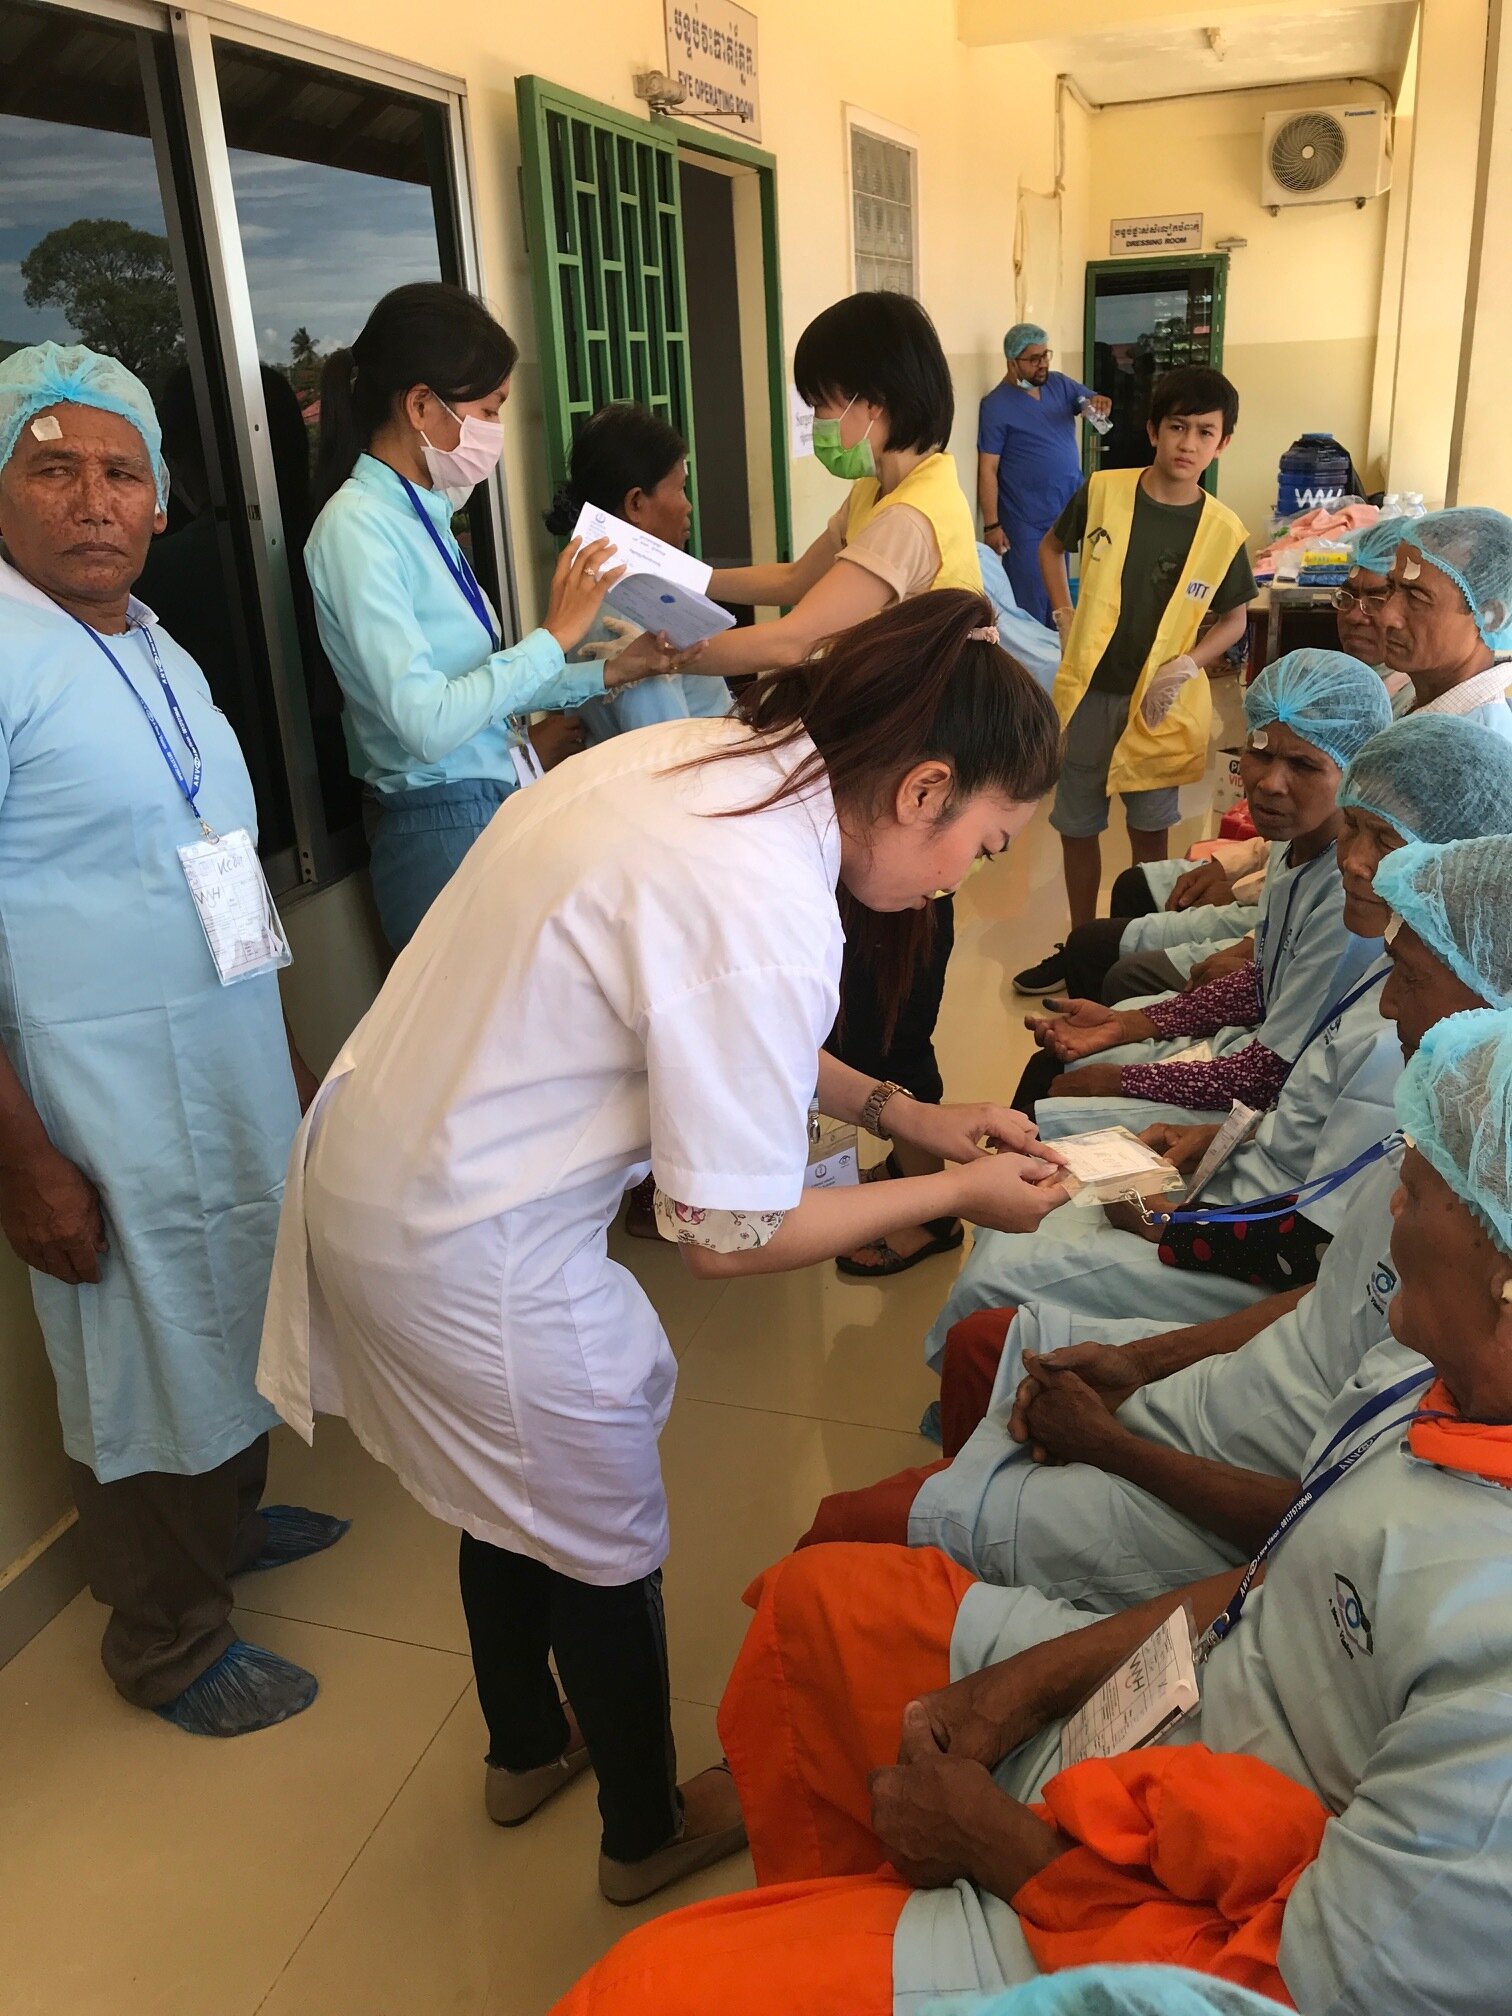 WAH Cambodia Cataract Mission surgery preparation.JPG